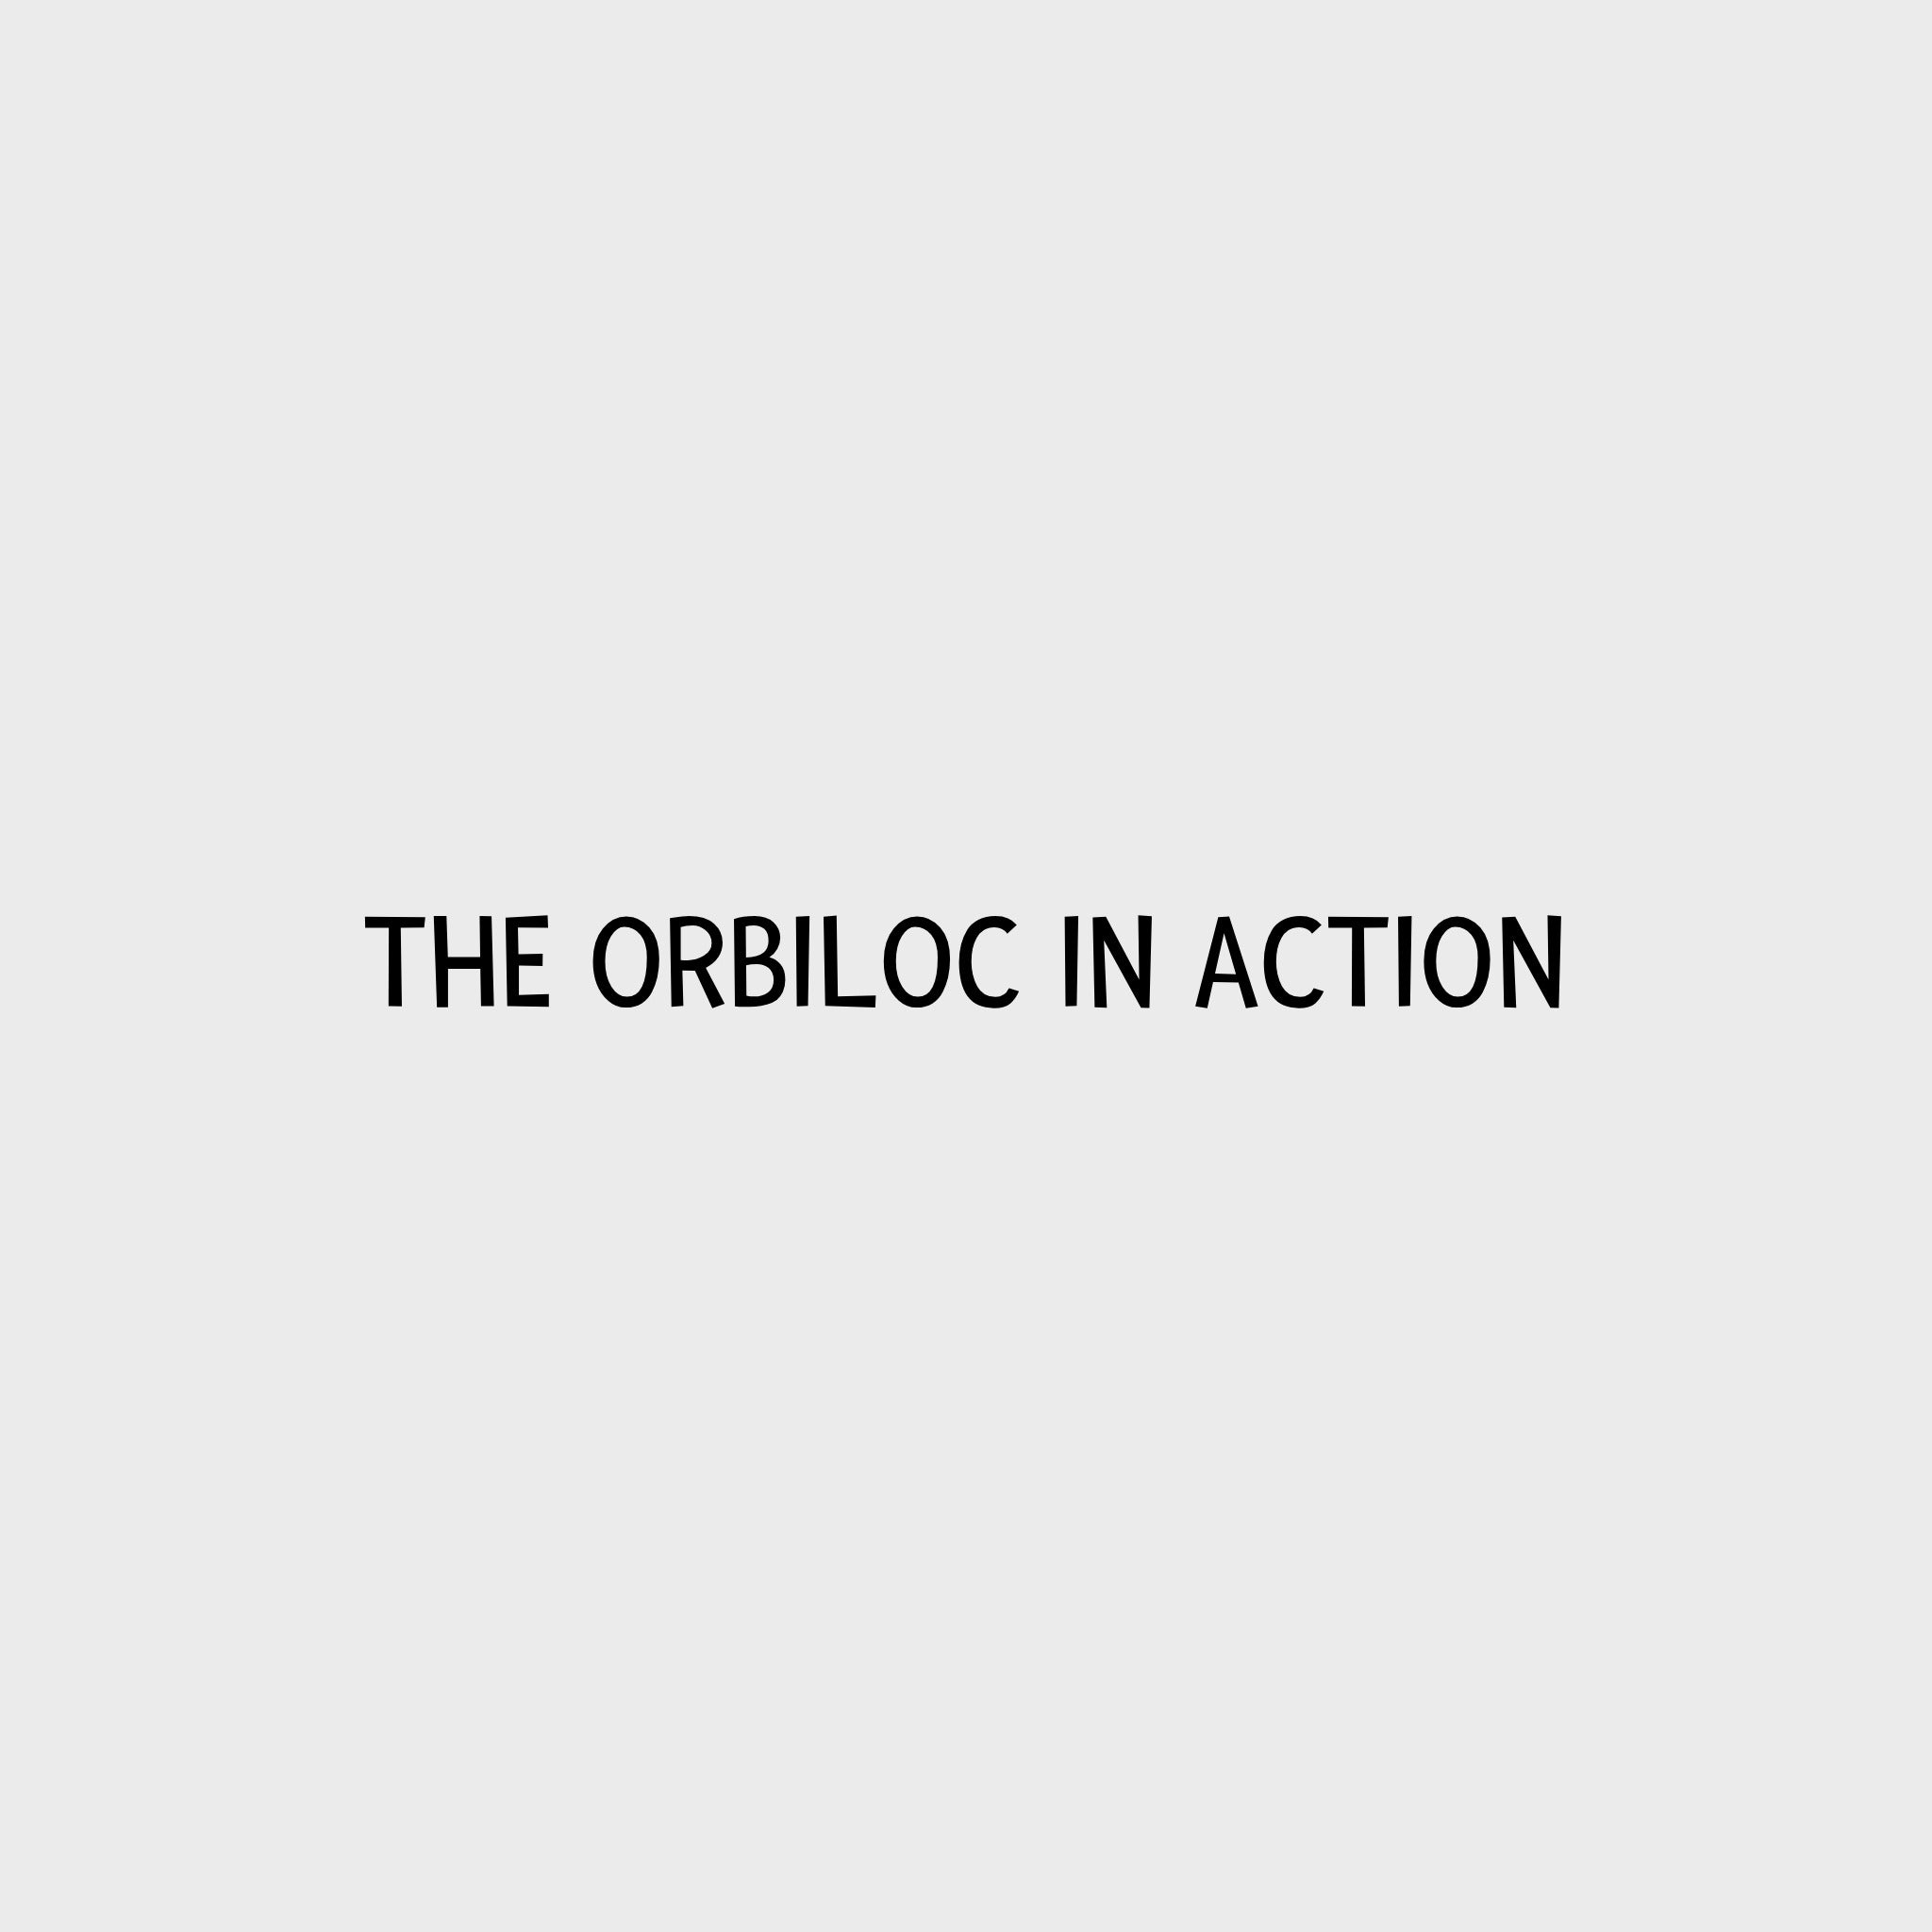 Video - Orbiloc in action